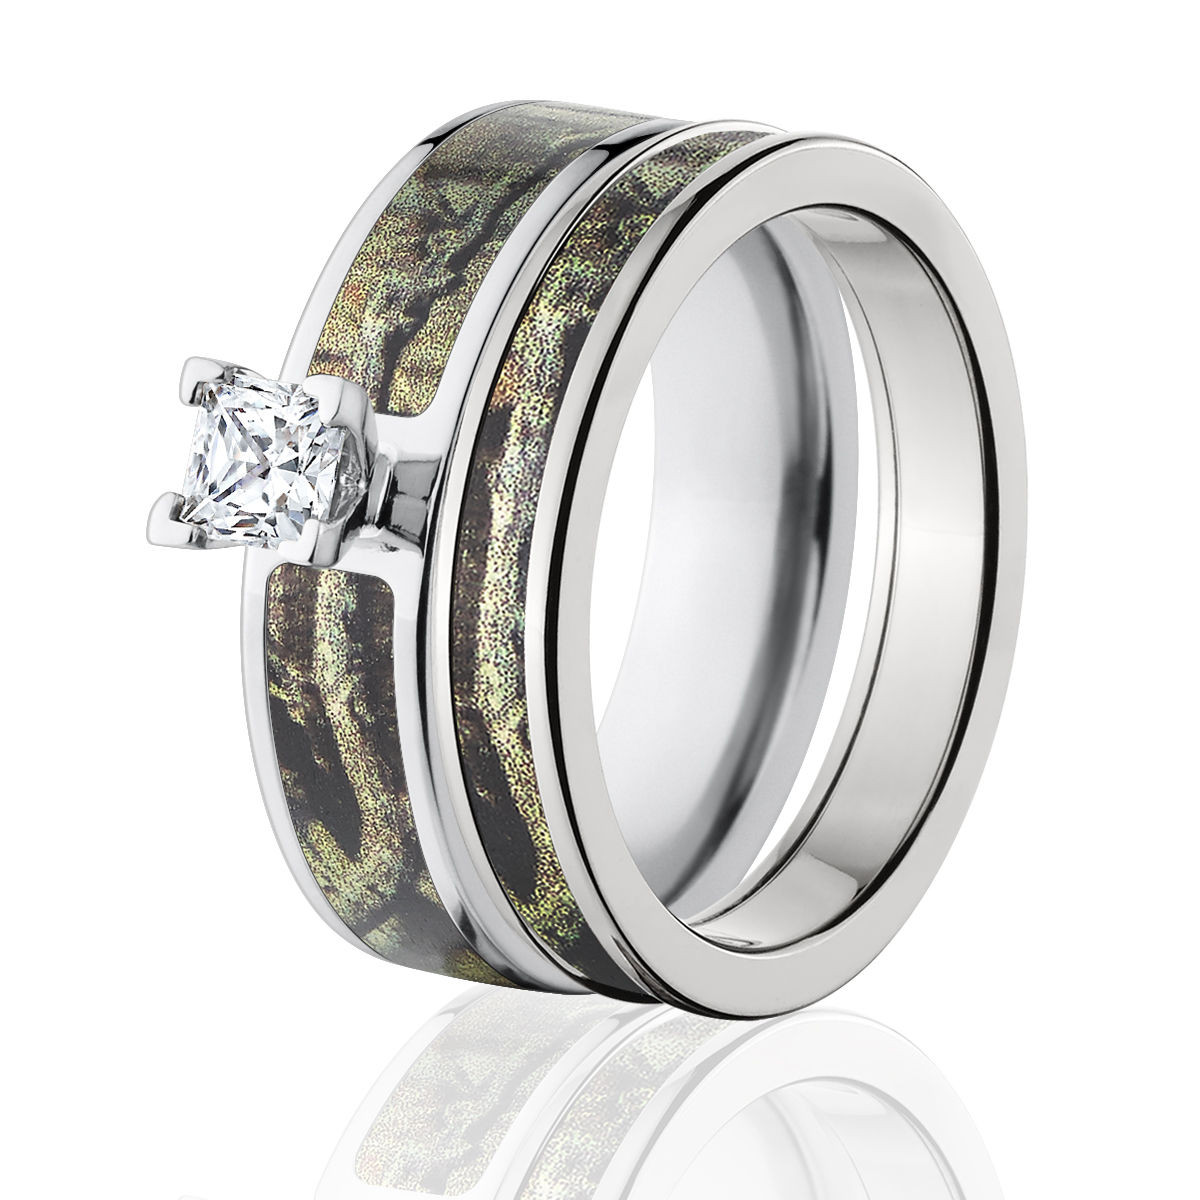 Camo Wedding Rings For Women
 Mossy Oak Break Up Infinity Womens Camo Ring Set